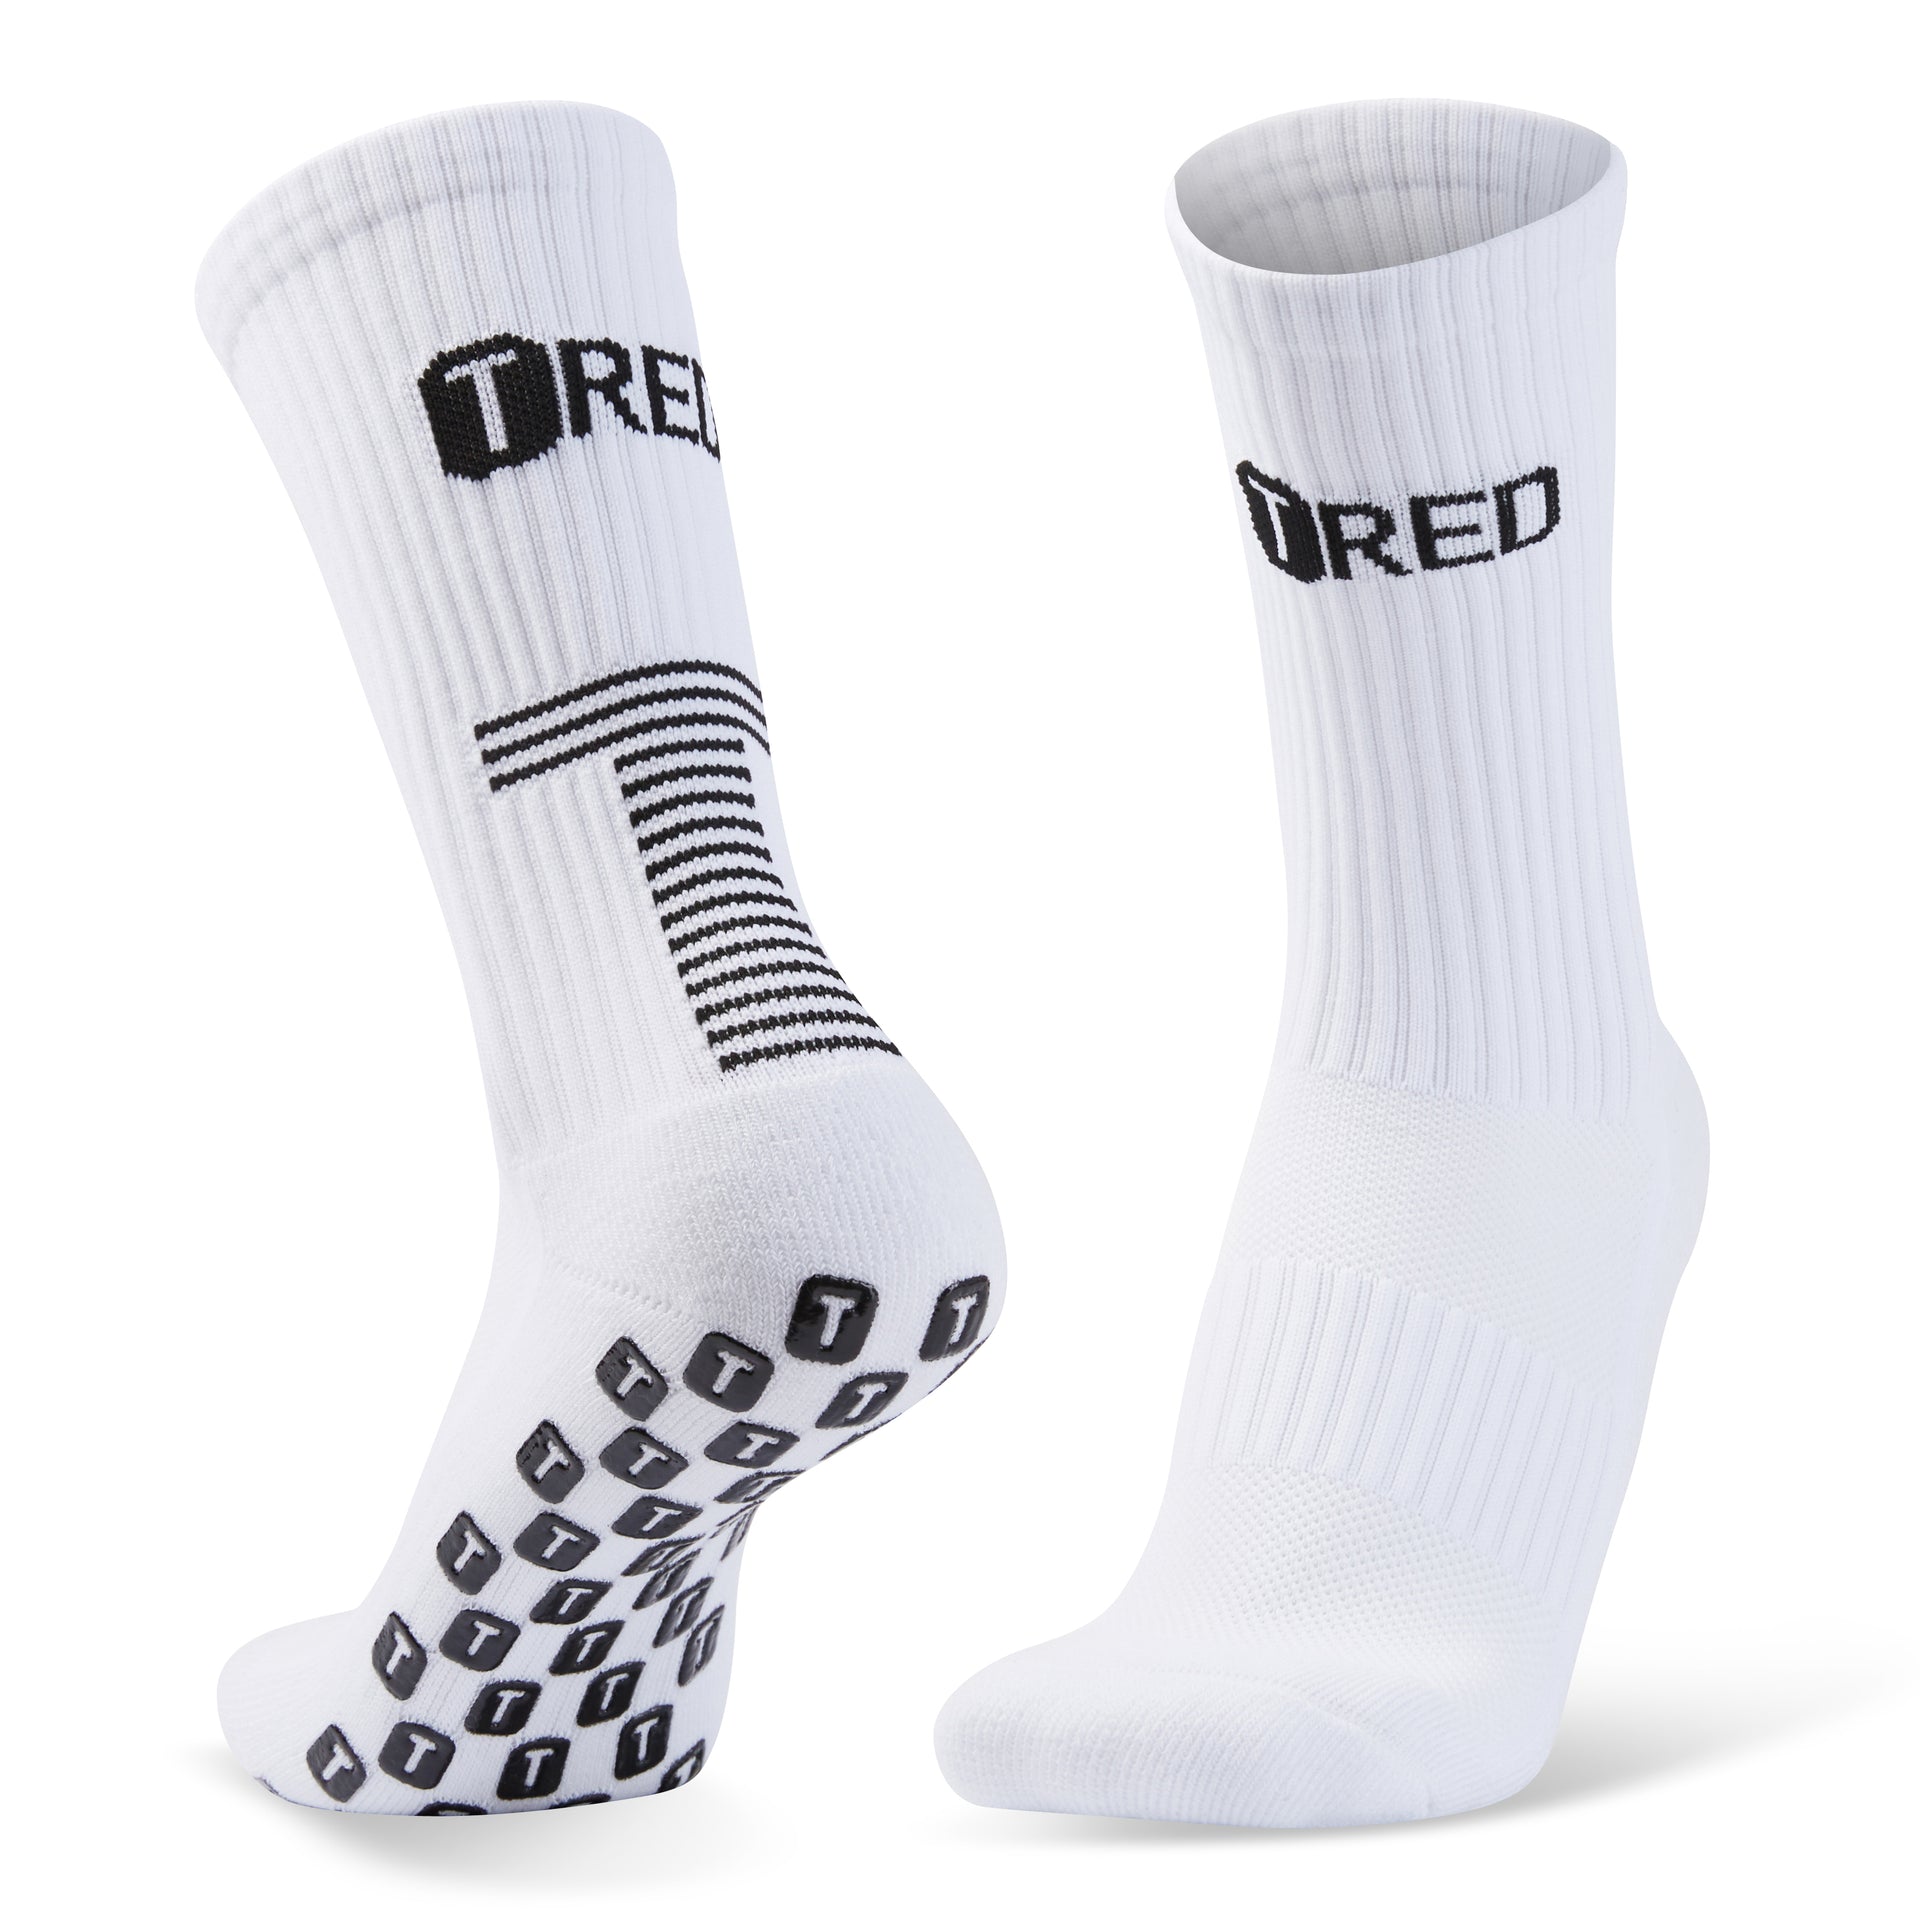 Grippy Socks in Lime – Daub + Design